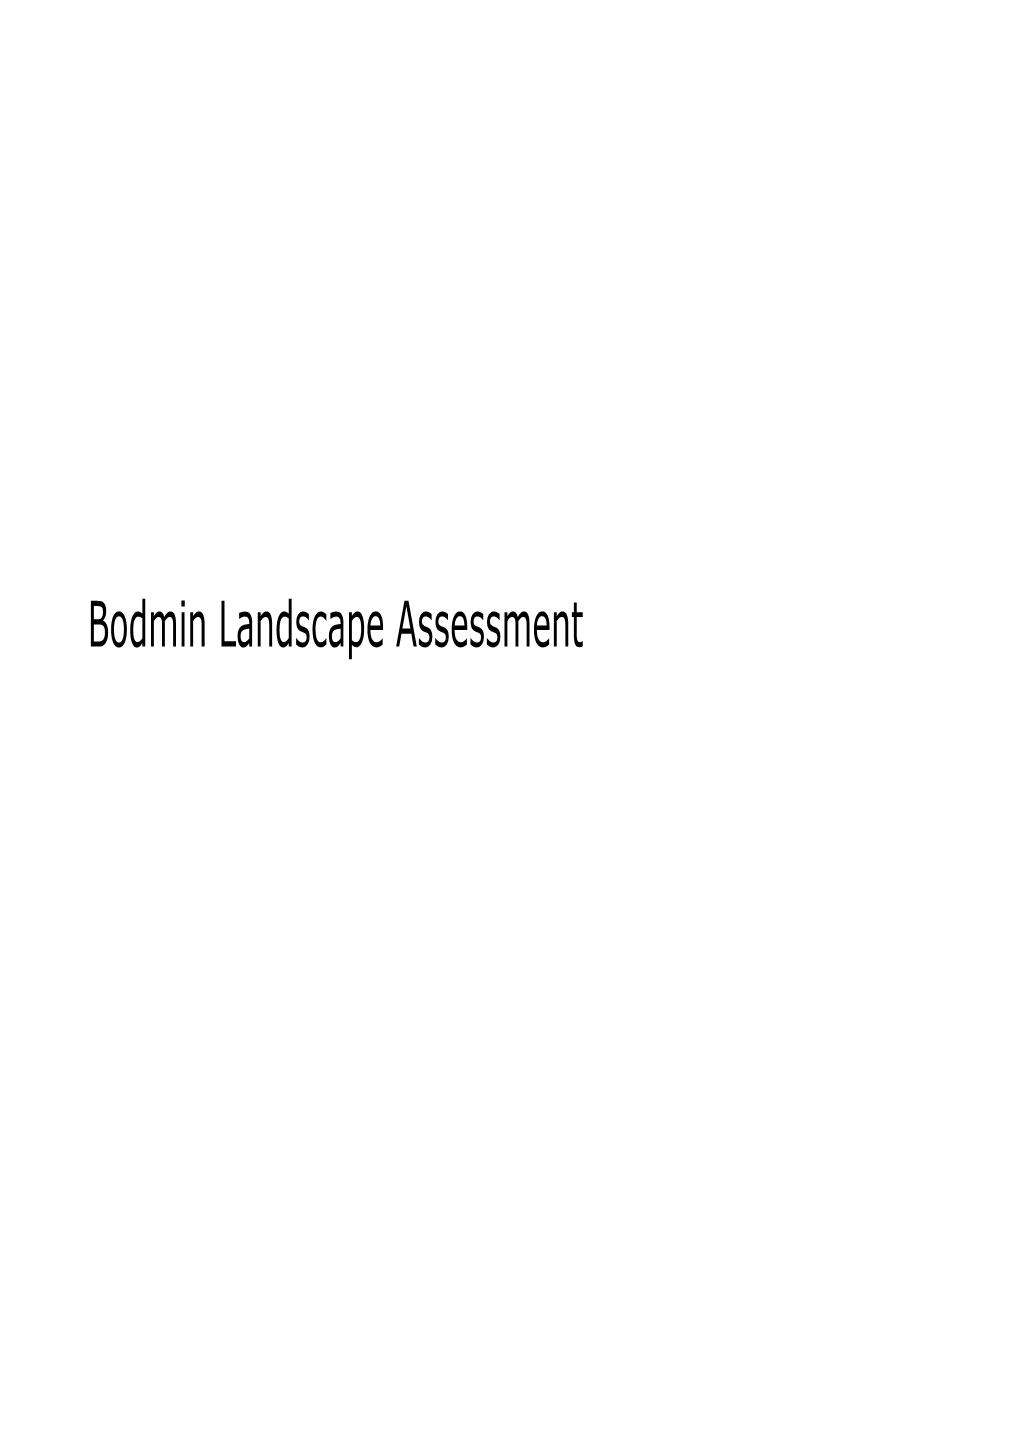 Bodmin Landscape Assessment BODMIN CELL REFERENCE: 1 ASSESSOR: Nola O’ Donnell CMLI DATE: 23 August 2013